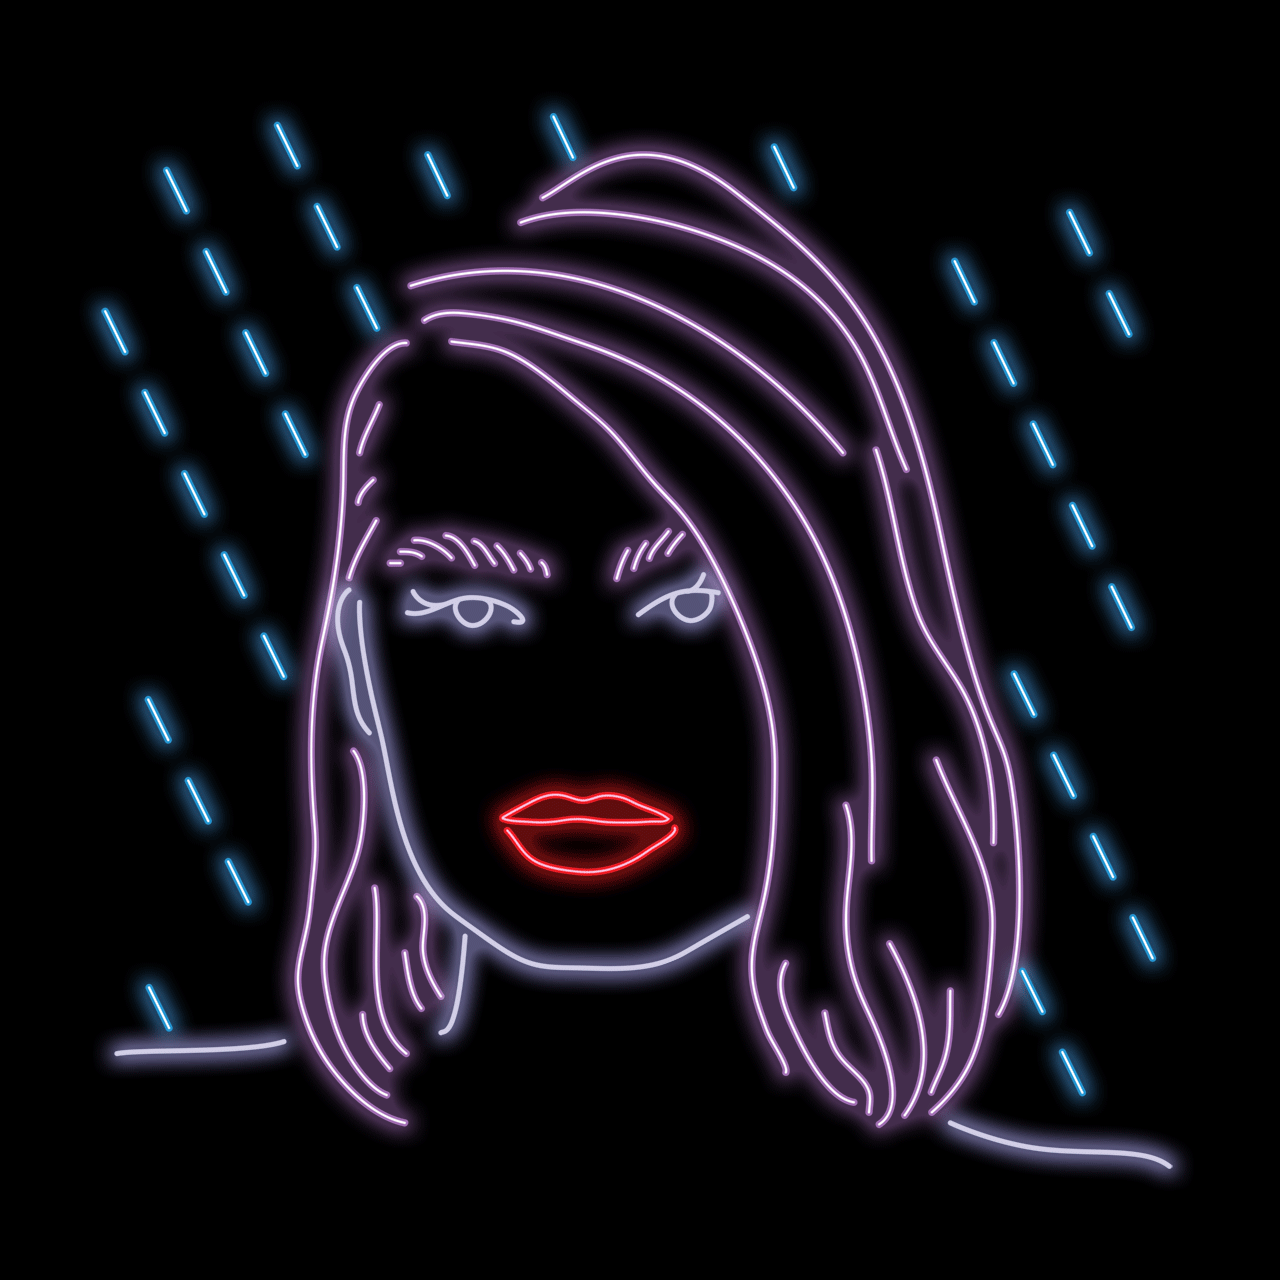 art,woman,artists on tumblr,glow,red lips,neon,femme fatale,illustration,lipstick,noir,femme,popart,design,rain,portrait,storm,neon art,pulp art,dangerous women